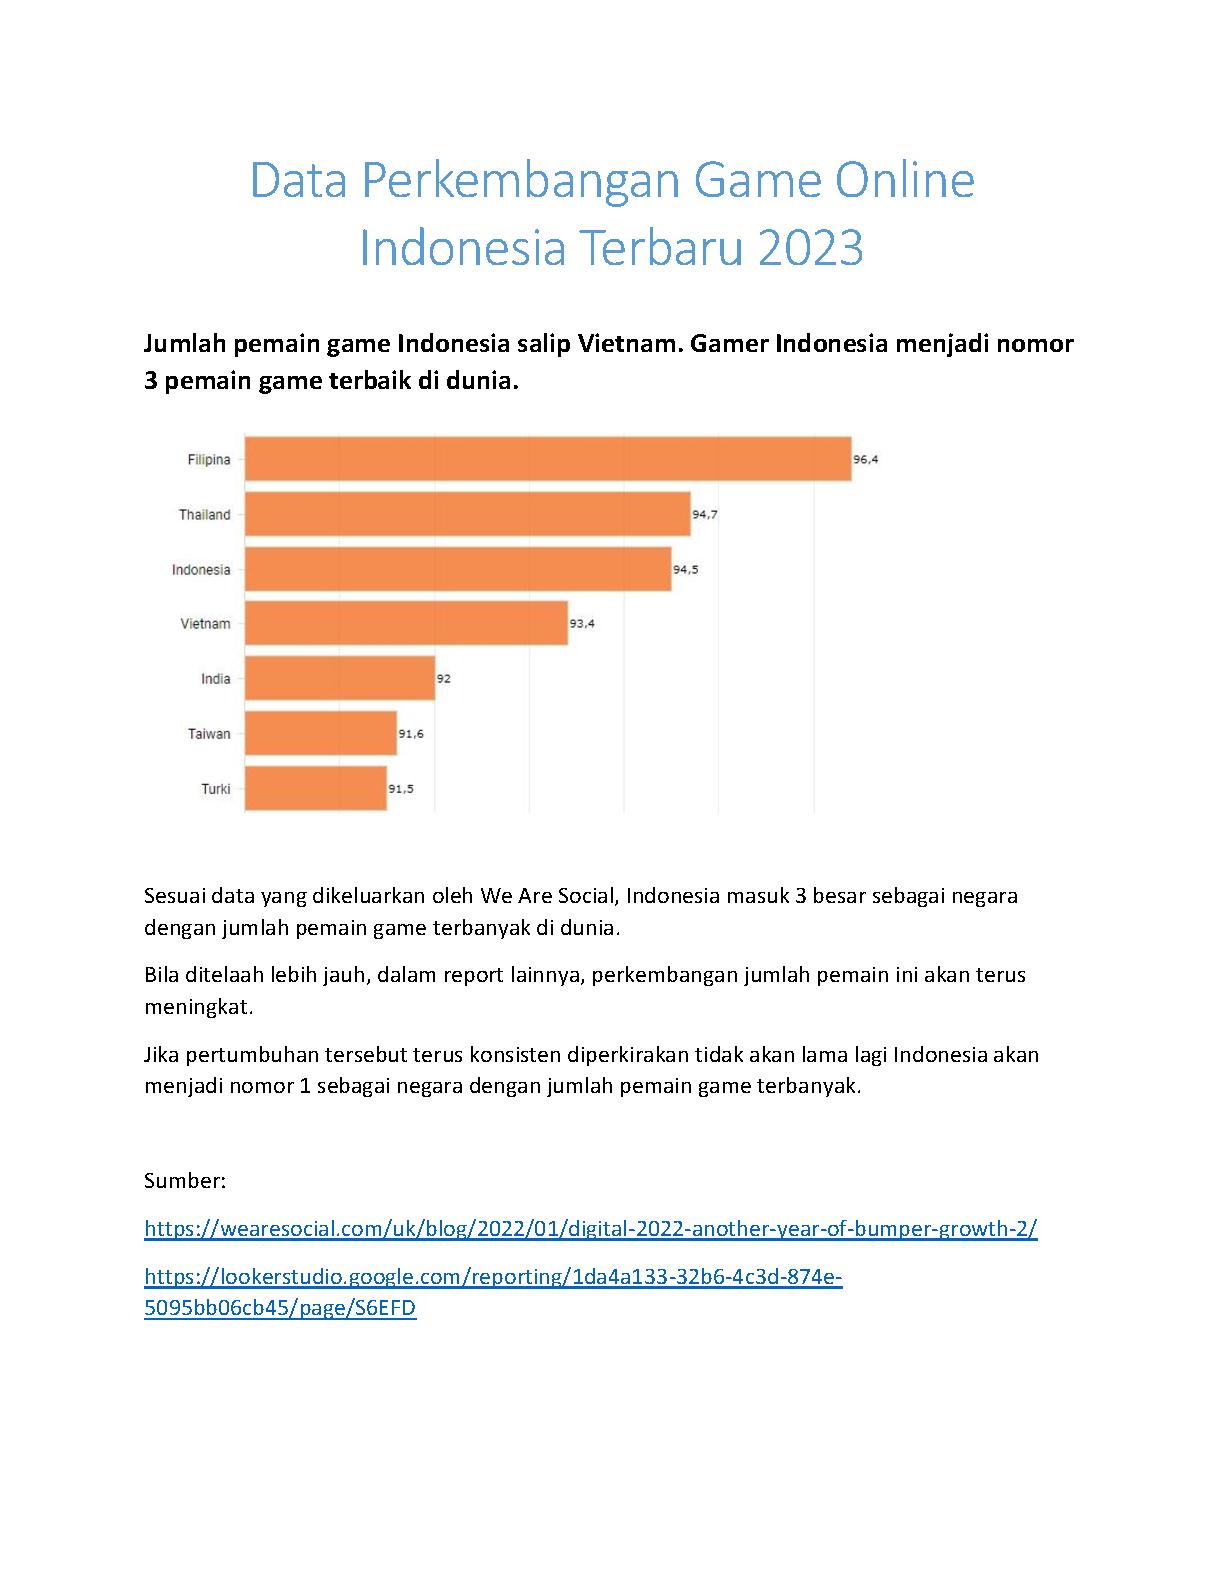 Data Perkembangan Game Online Indonesia Terbaru 2023.pdf PDF Host